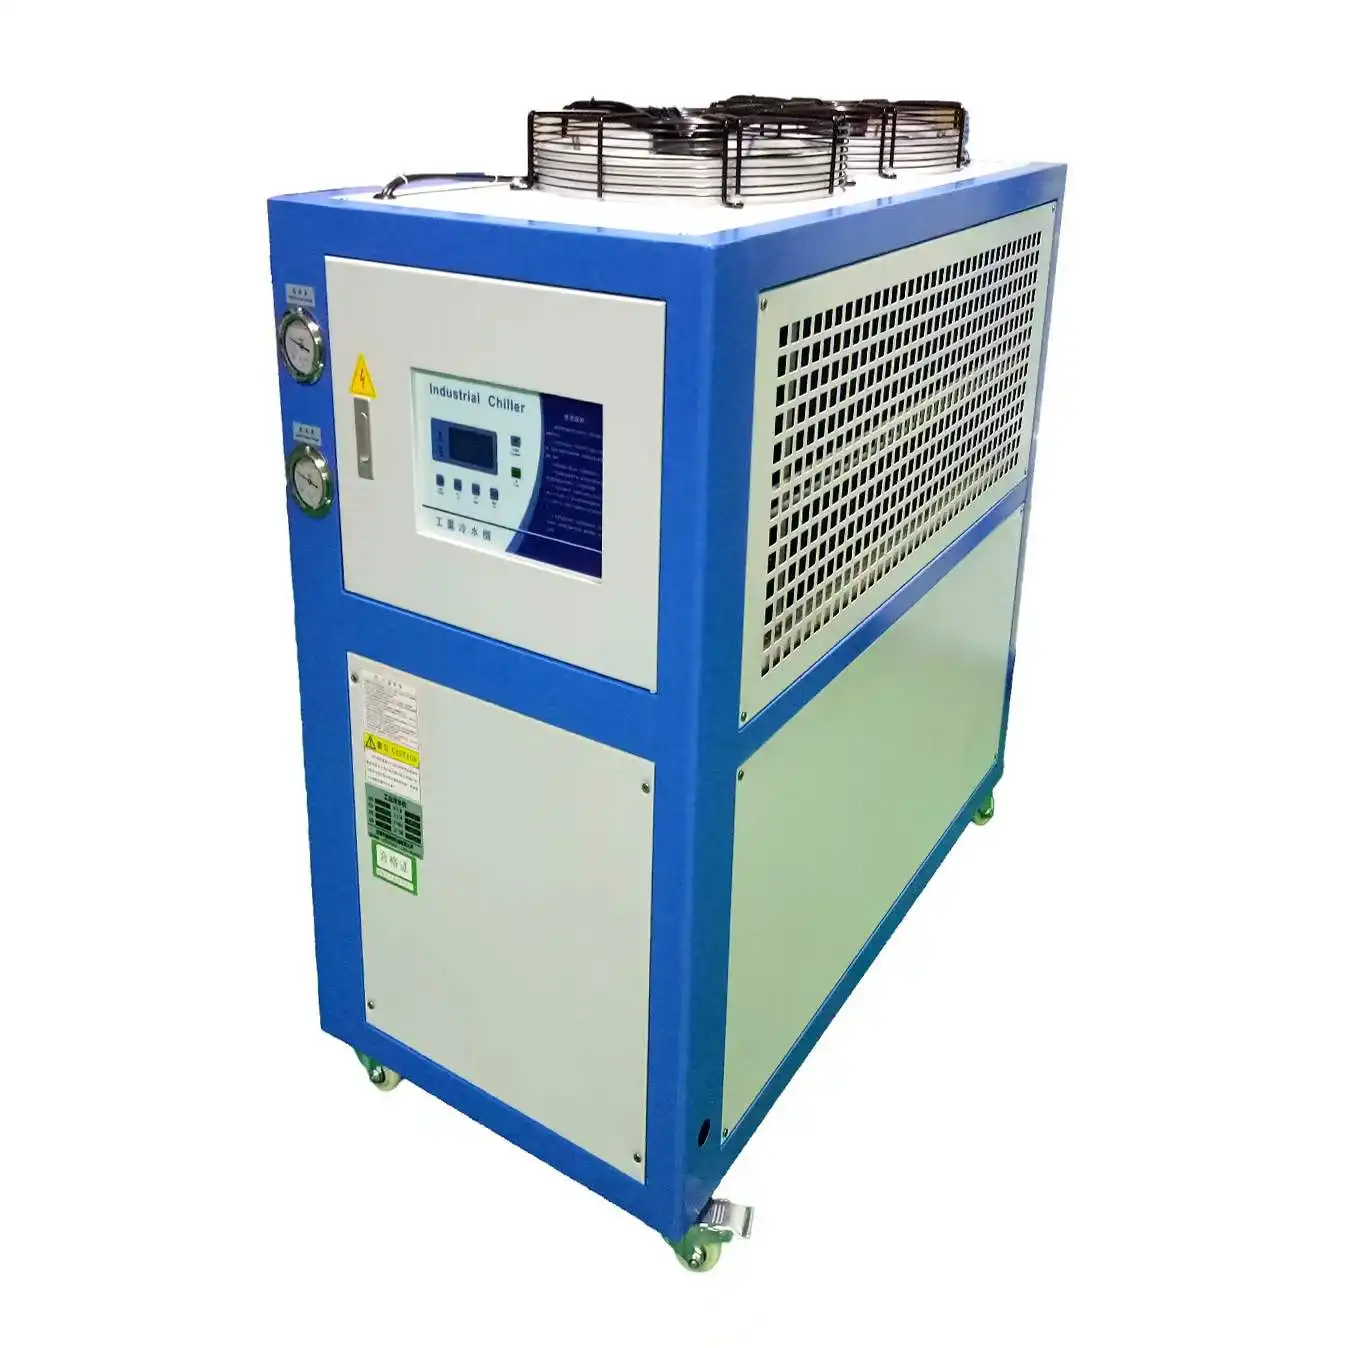 Aidear環境保護冷却装置工業用水冷チラーシステム